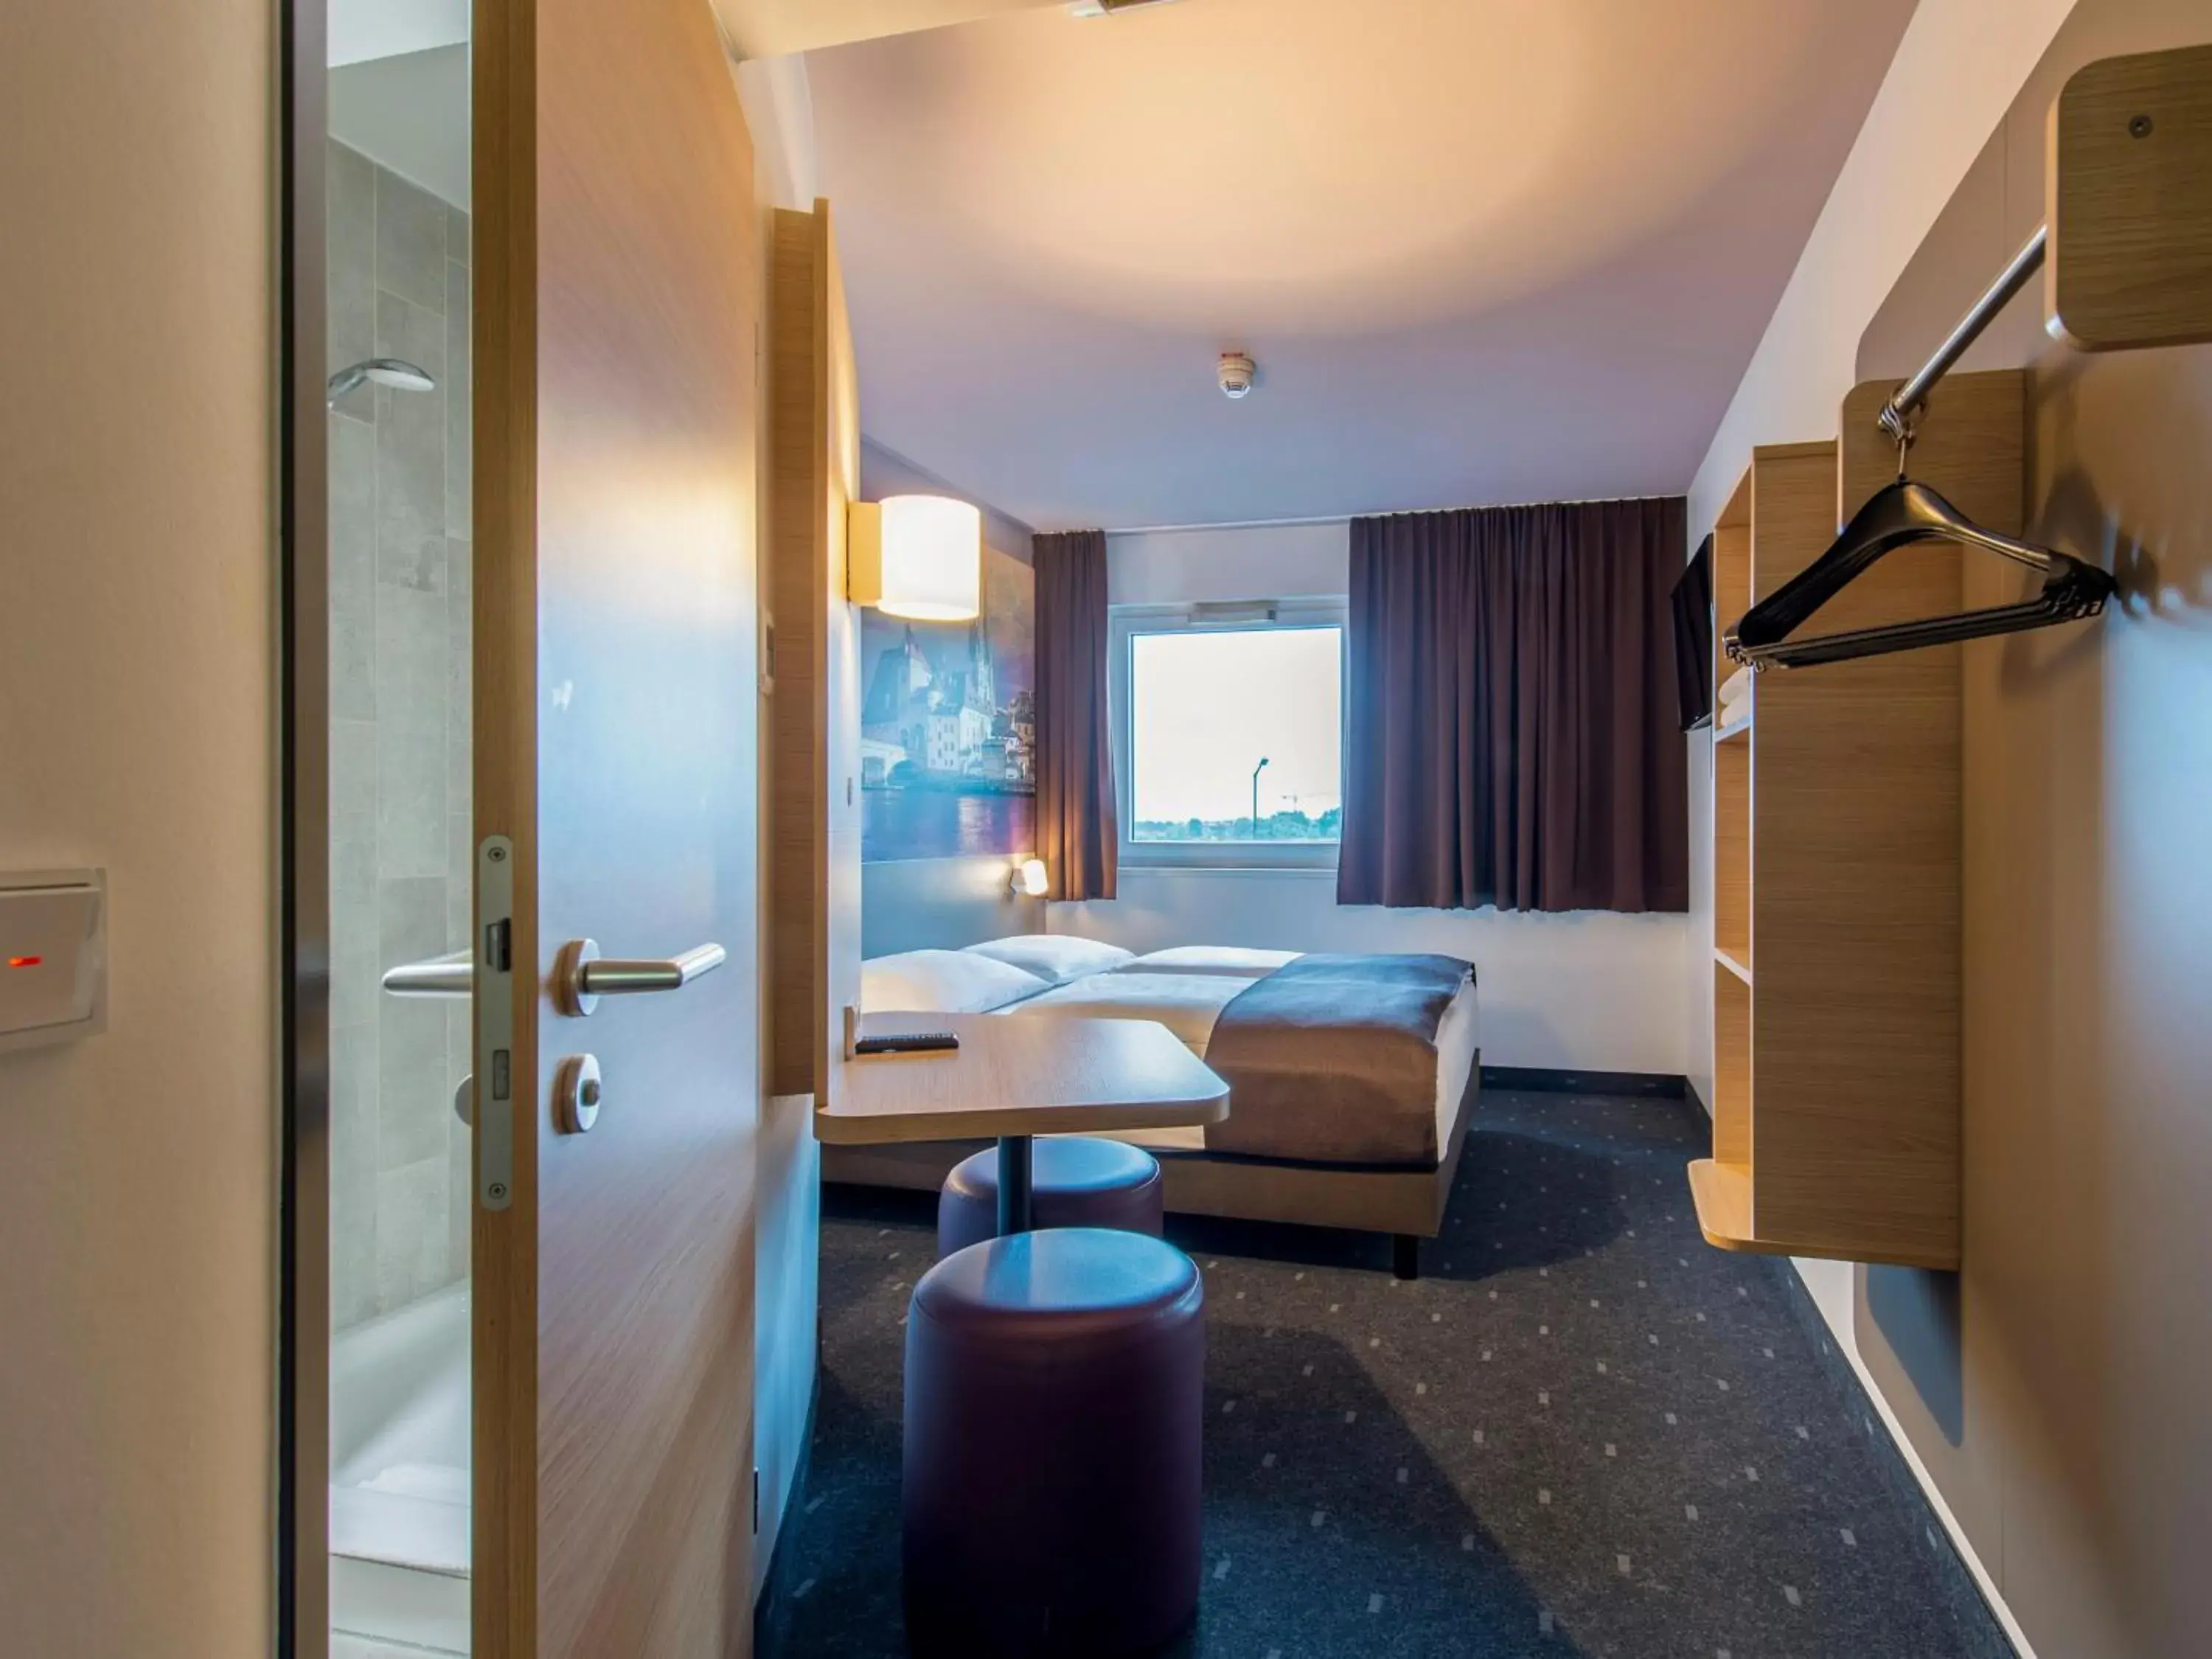 Photo of the whole room, Bathroom in B&B Hotel Regensburg